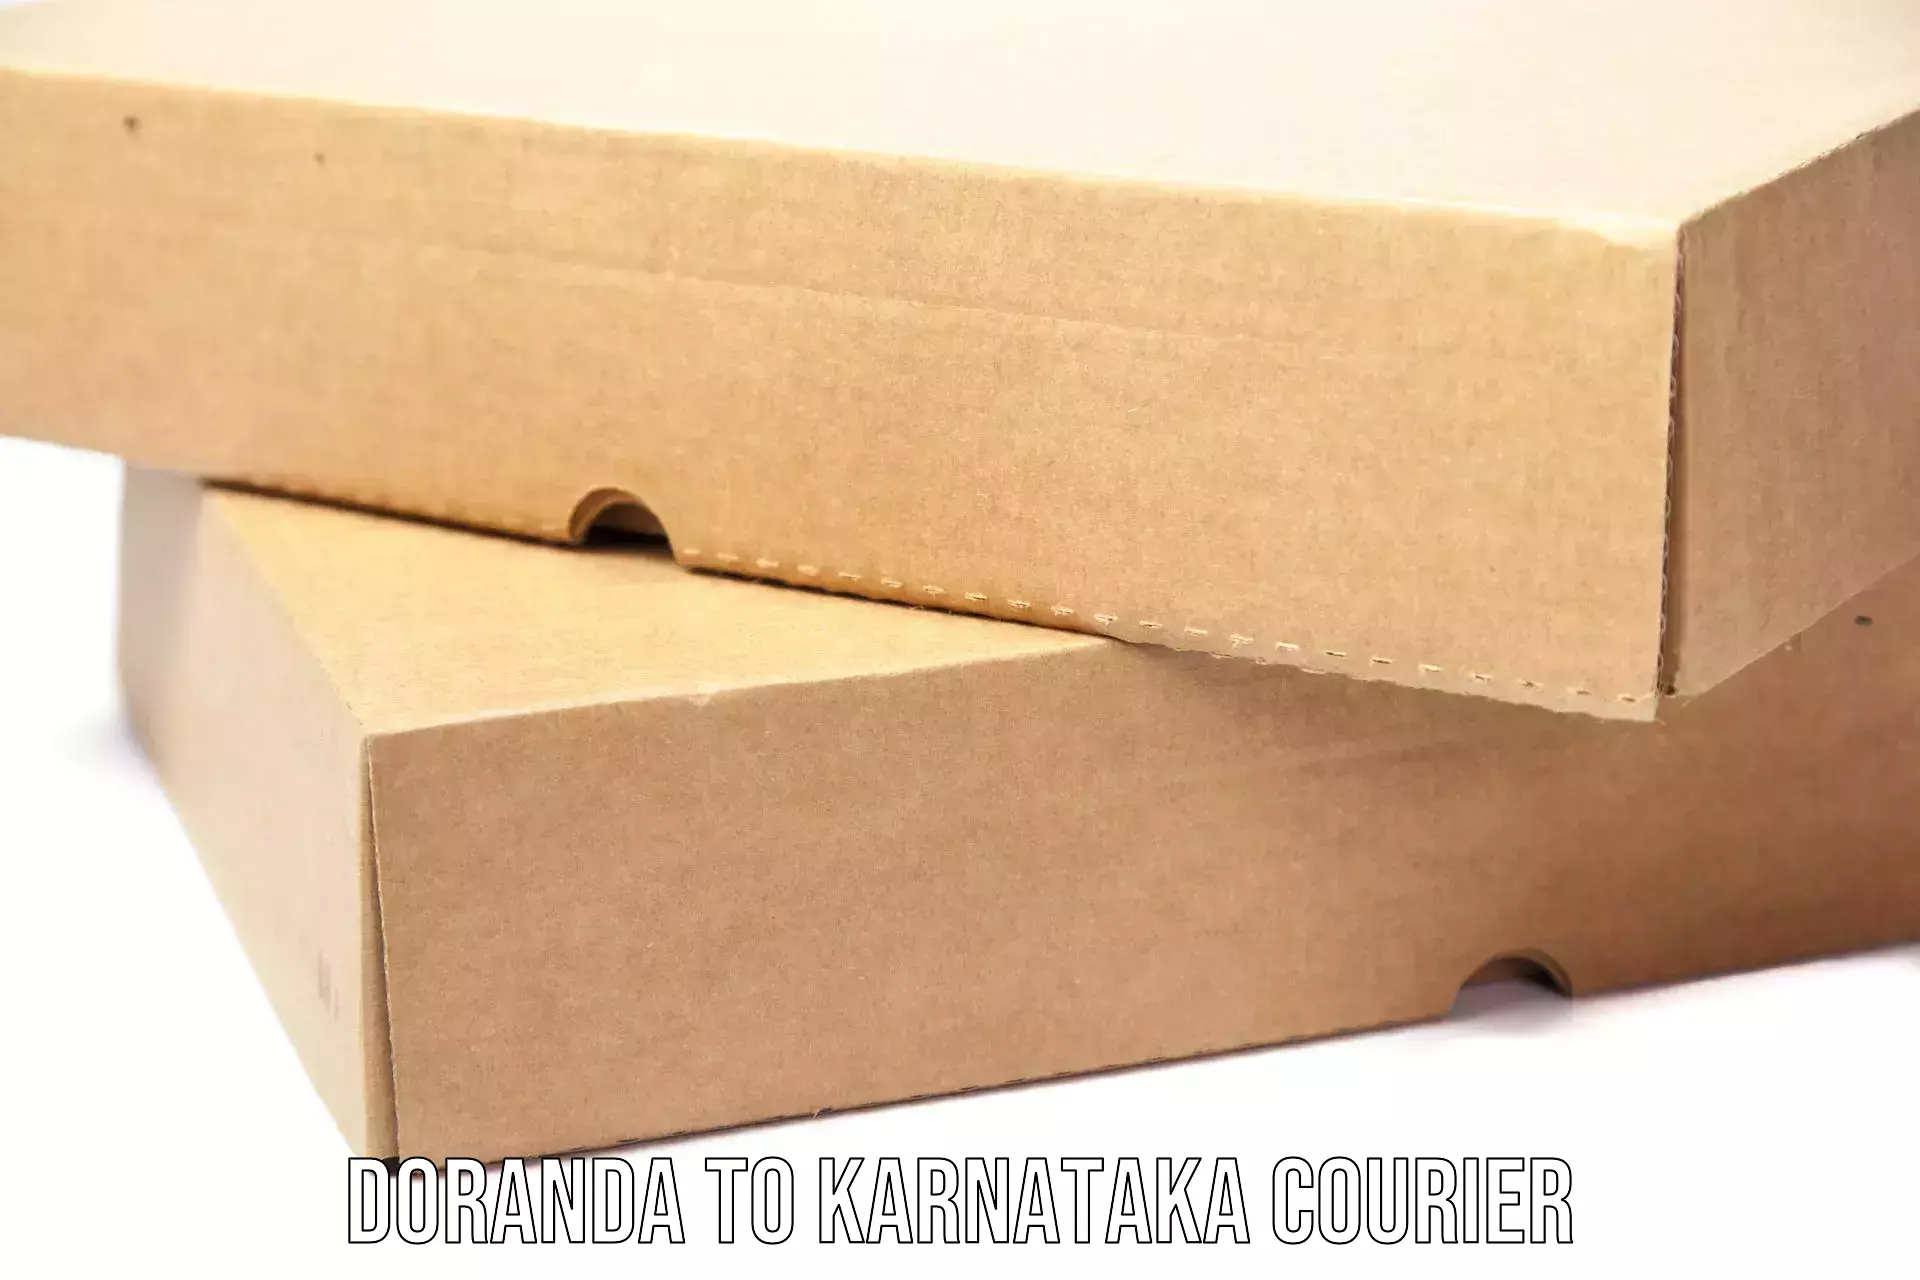 Small business couriers Doranda to Karkala